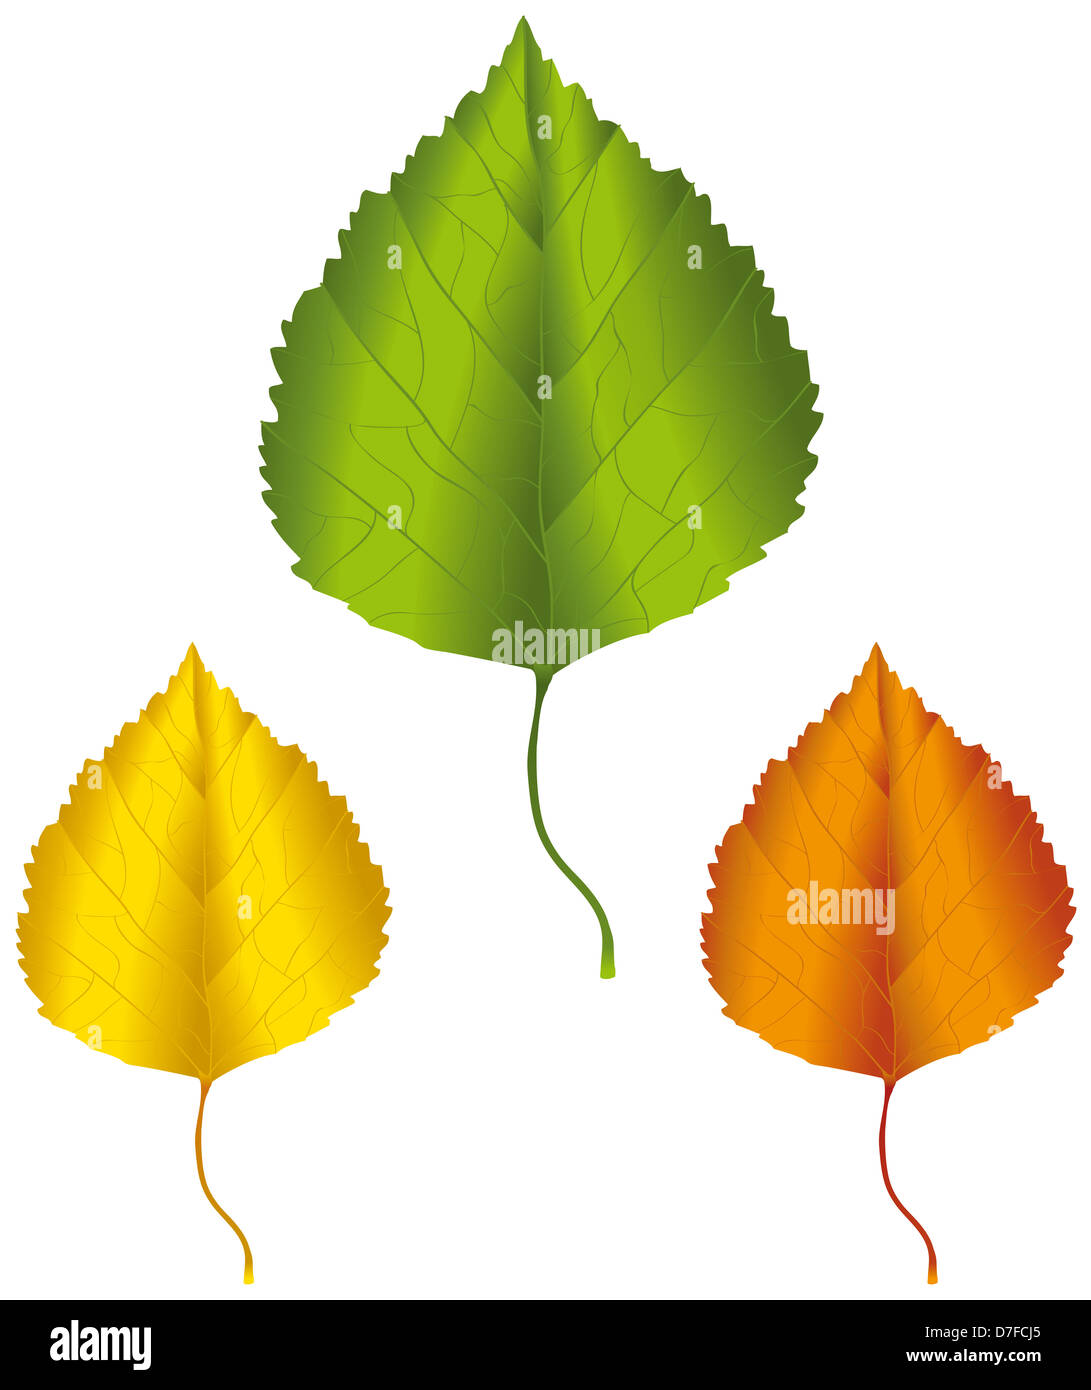 a-birch-leaf-in-green-yellow-and-orange-colors-D7FCJ5.jpg